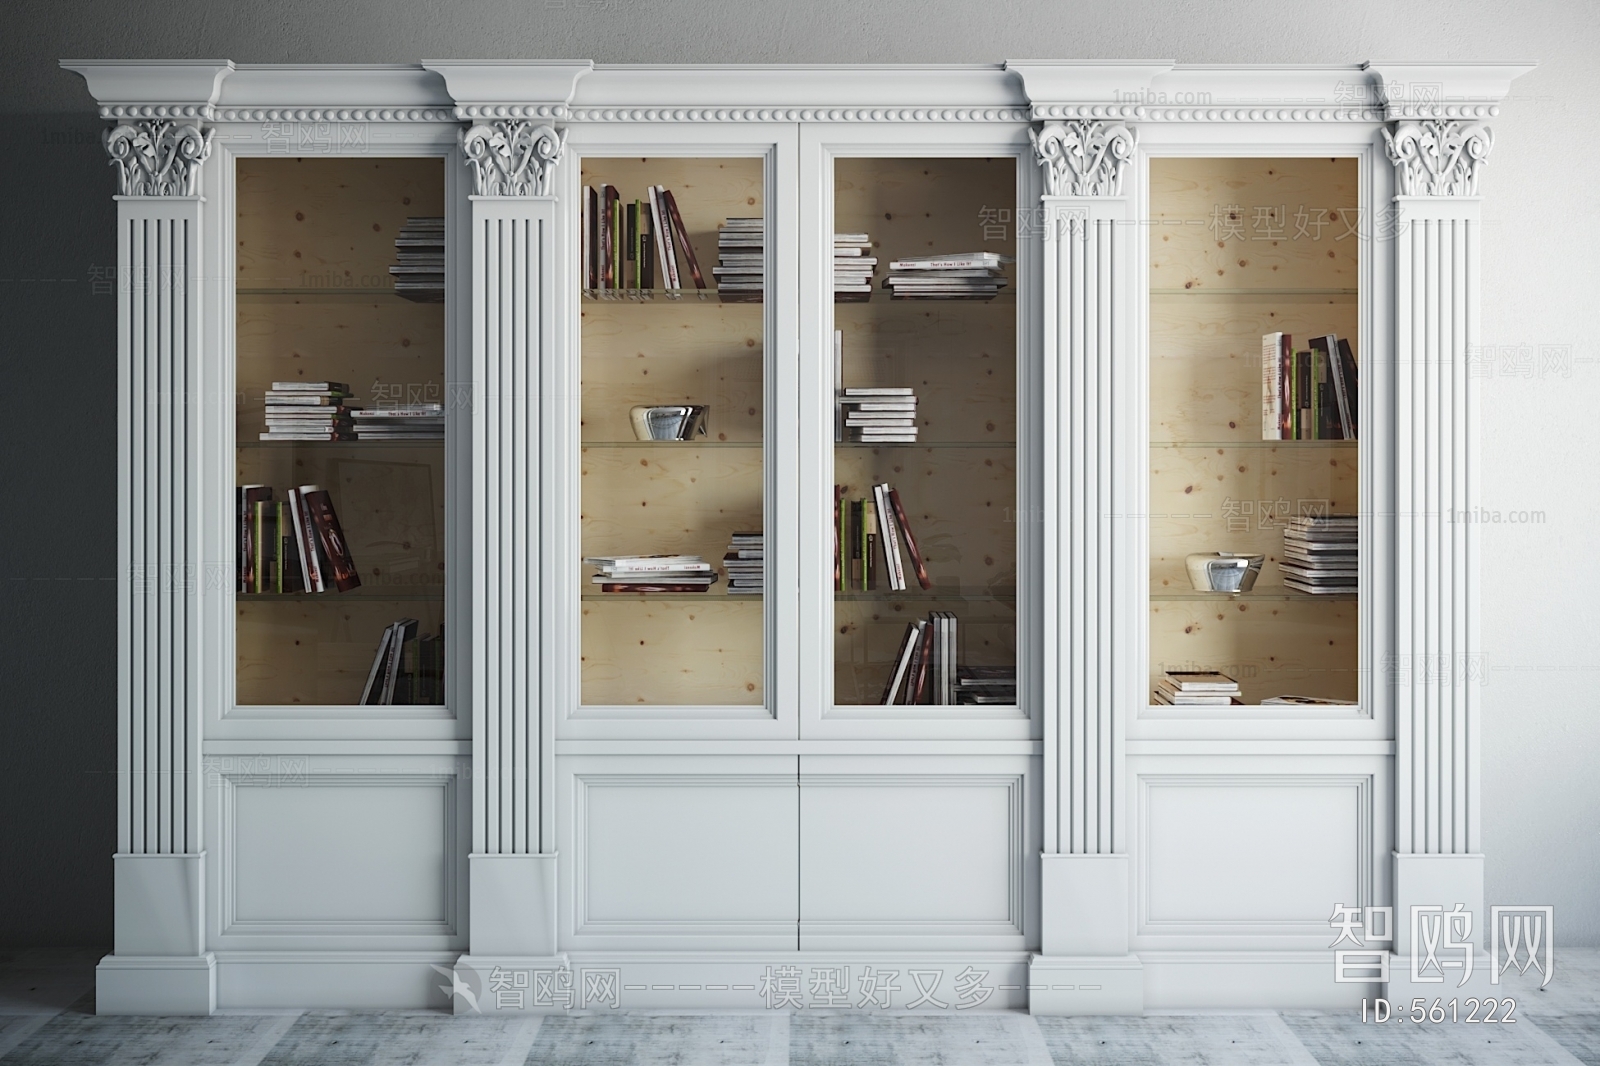 European Style Bookcase